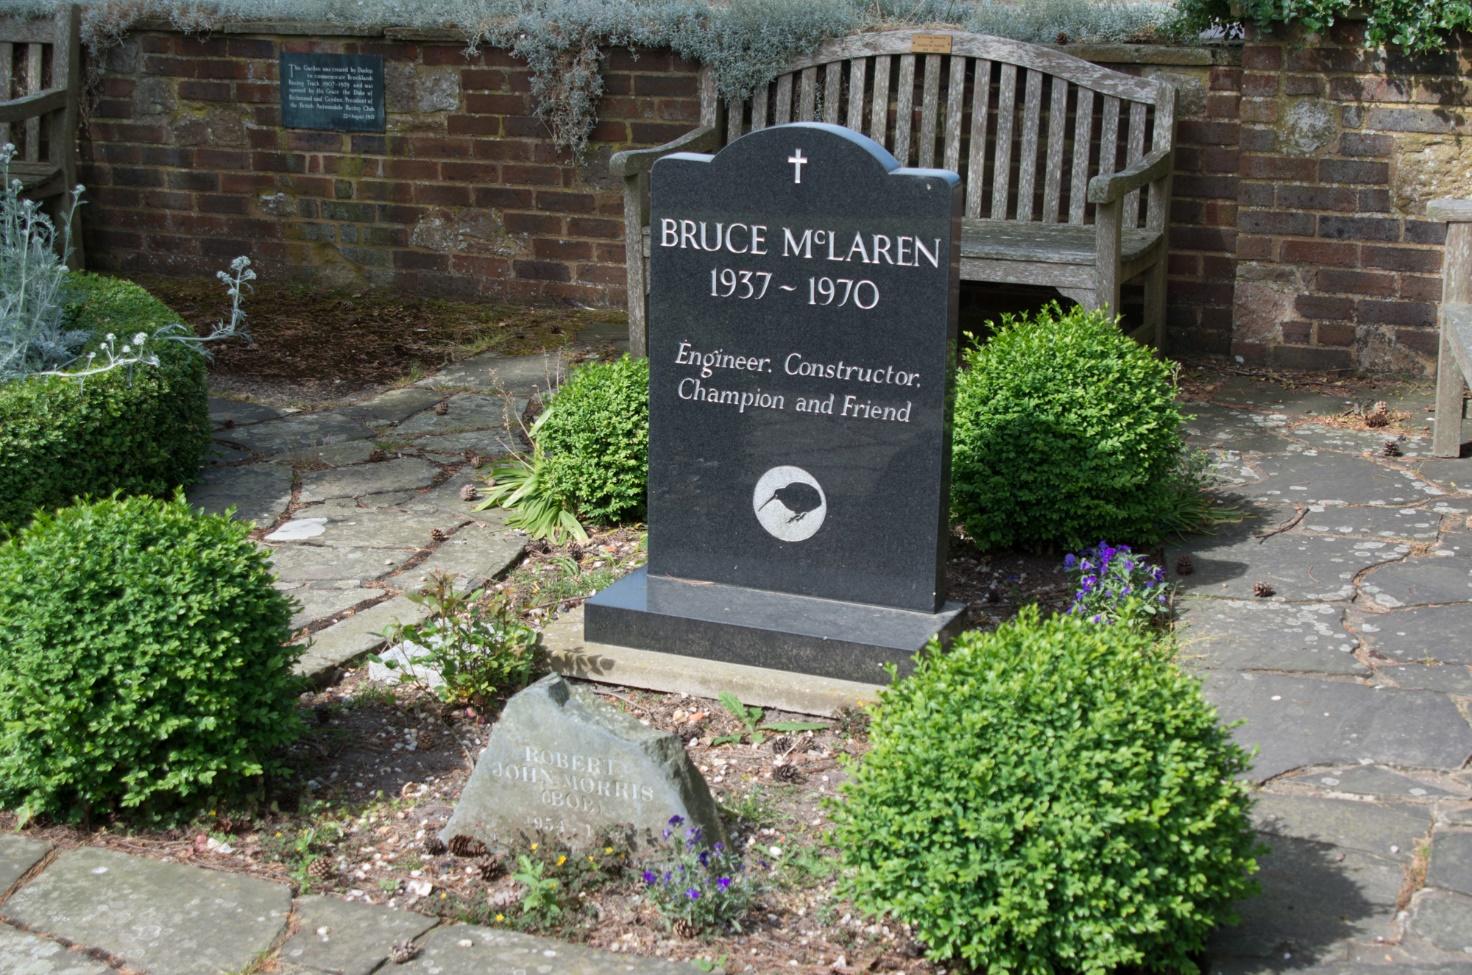 The tomb of Bruce McLaren.